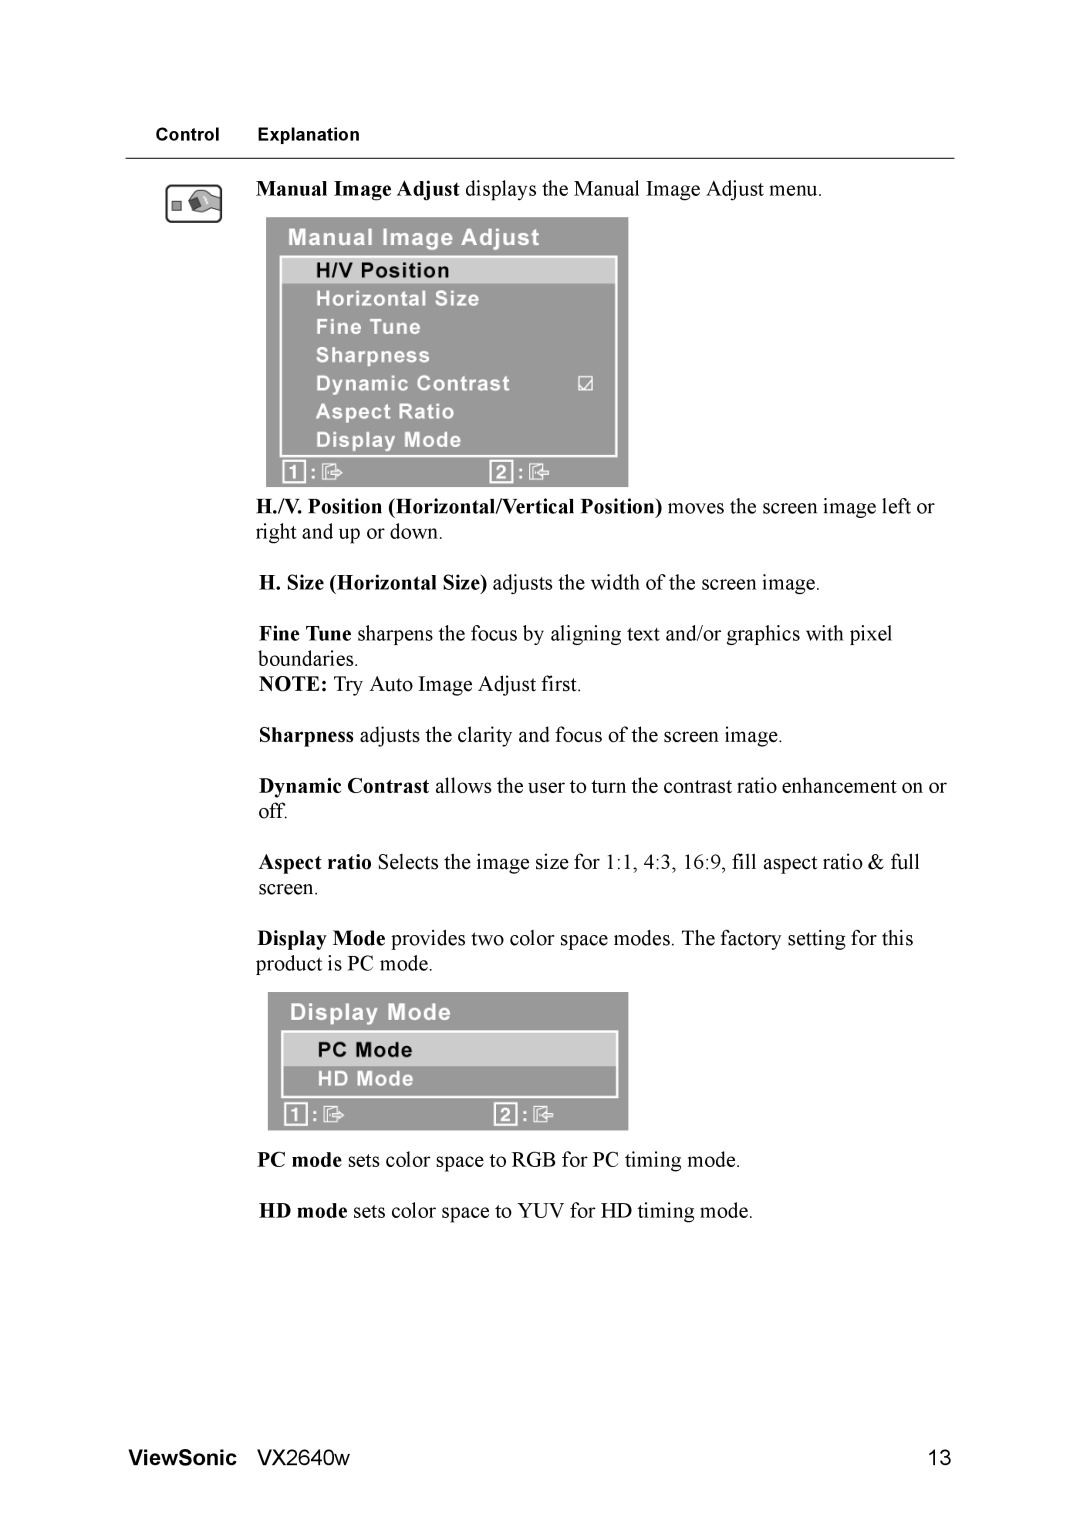 ViewSonic VX2640W warranty Manual Image Adjust displays the Manual Image Adjust menu 